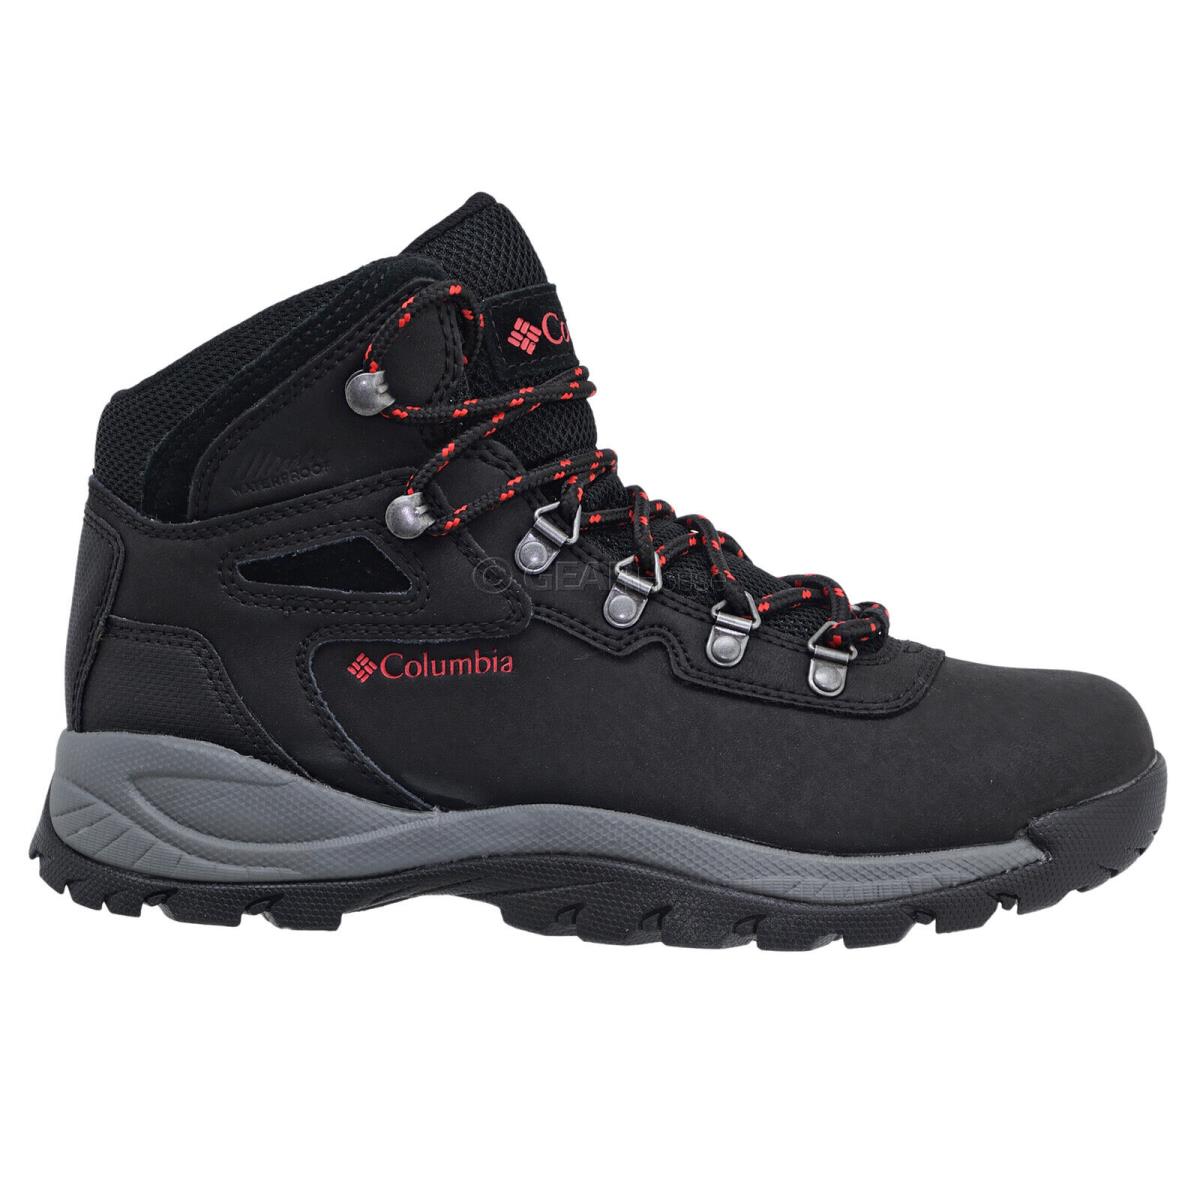 Columbia Newton Ridge Plus Womens Waterproof Leather Hiking Boots Size 8.5 Black